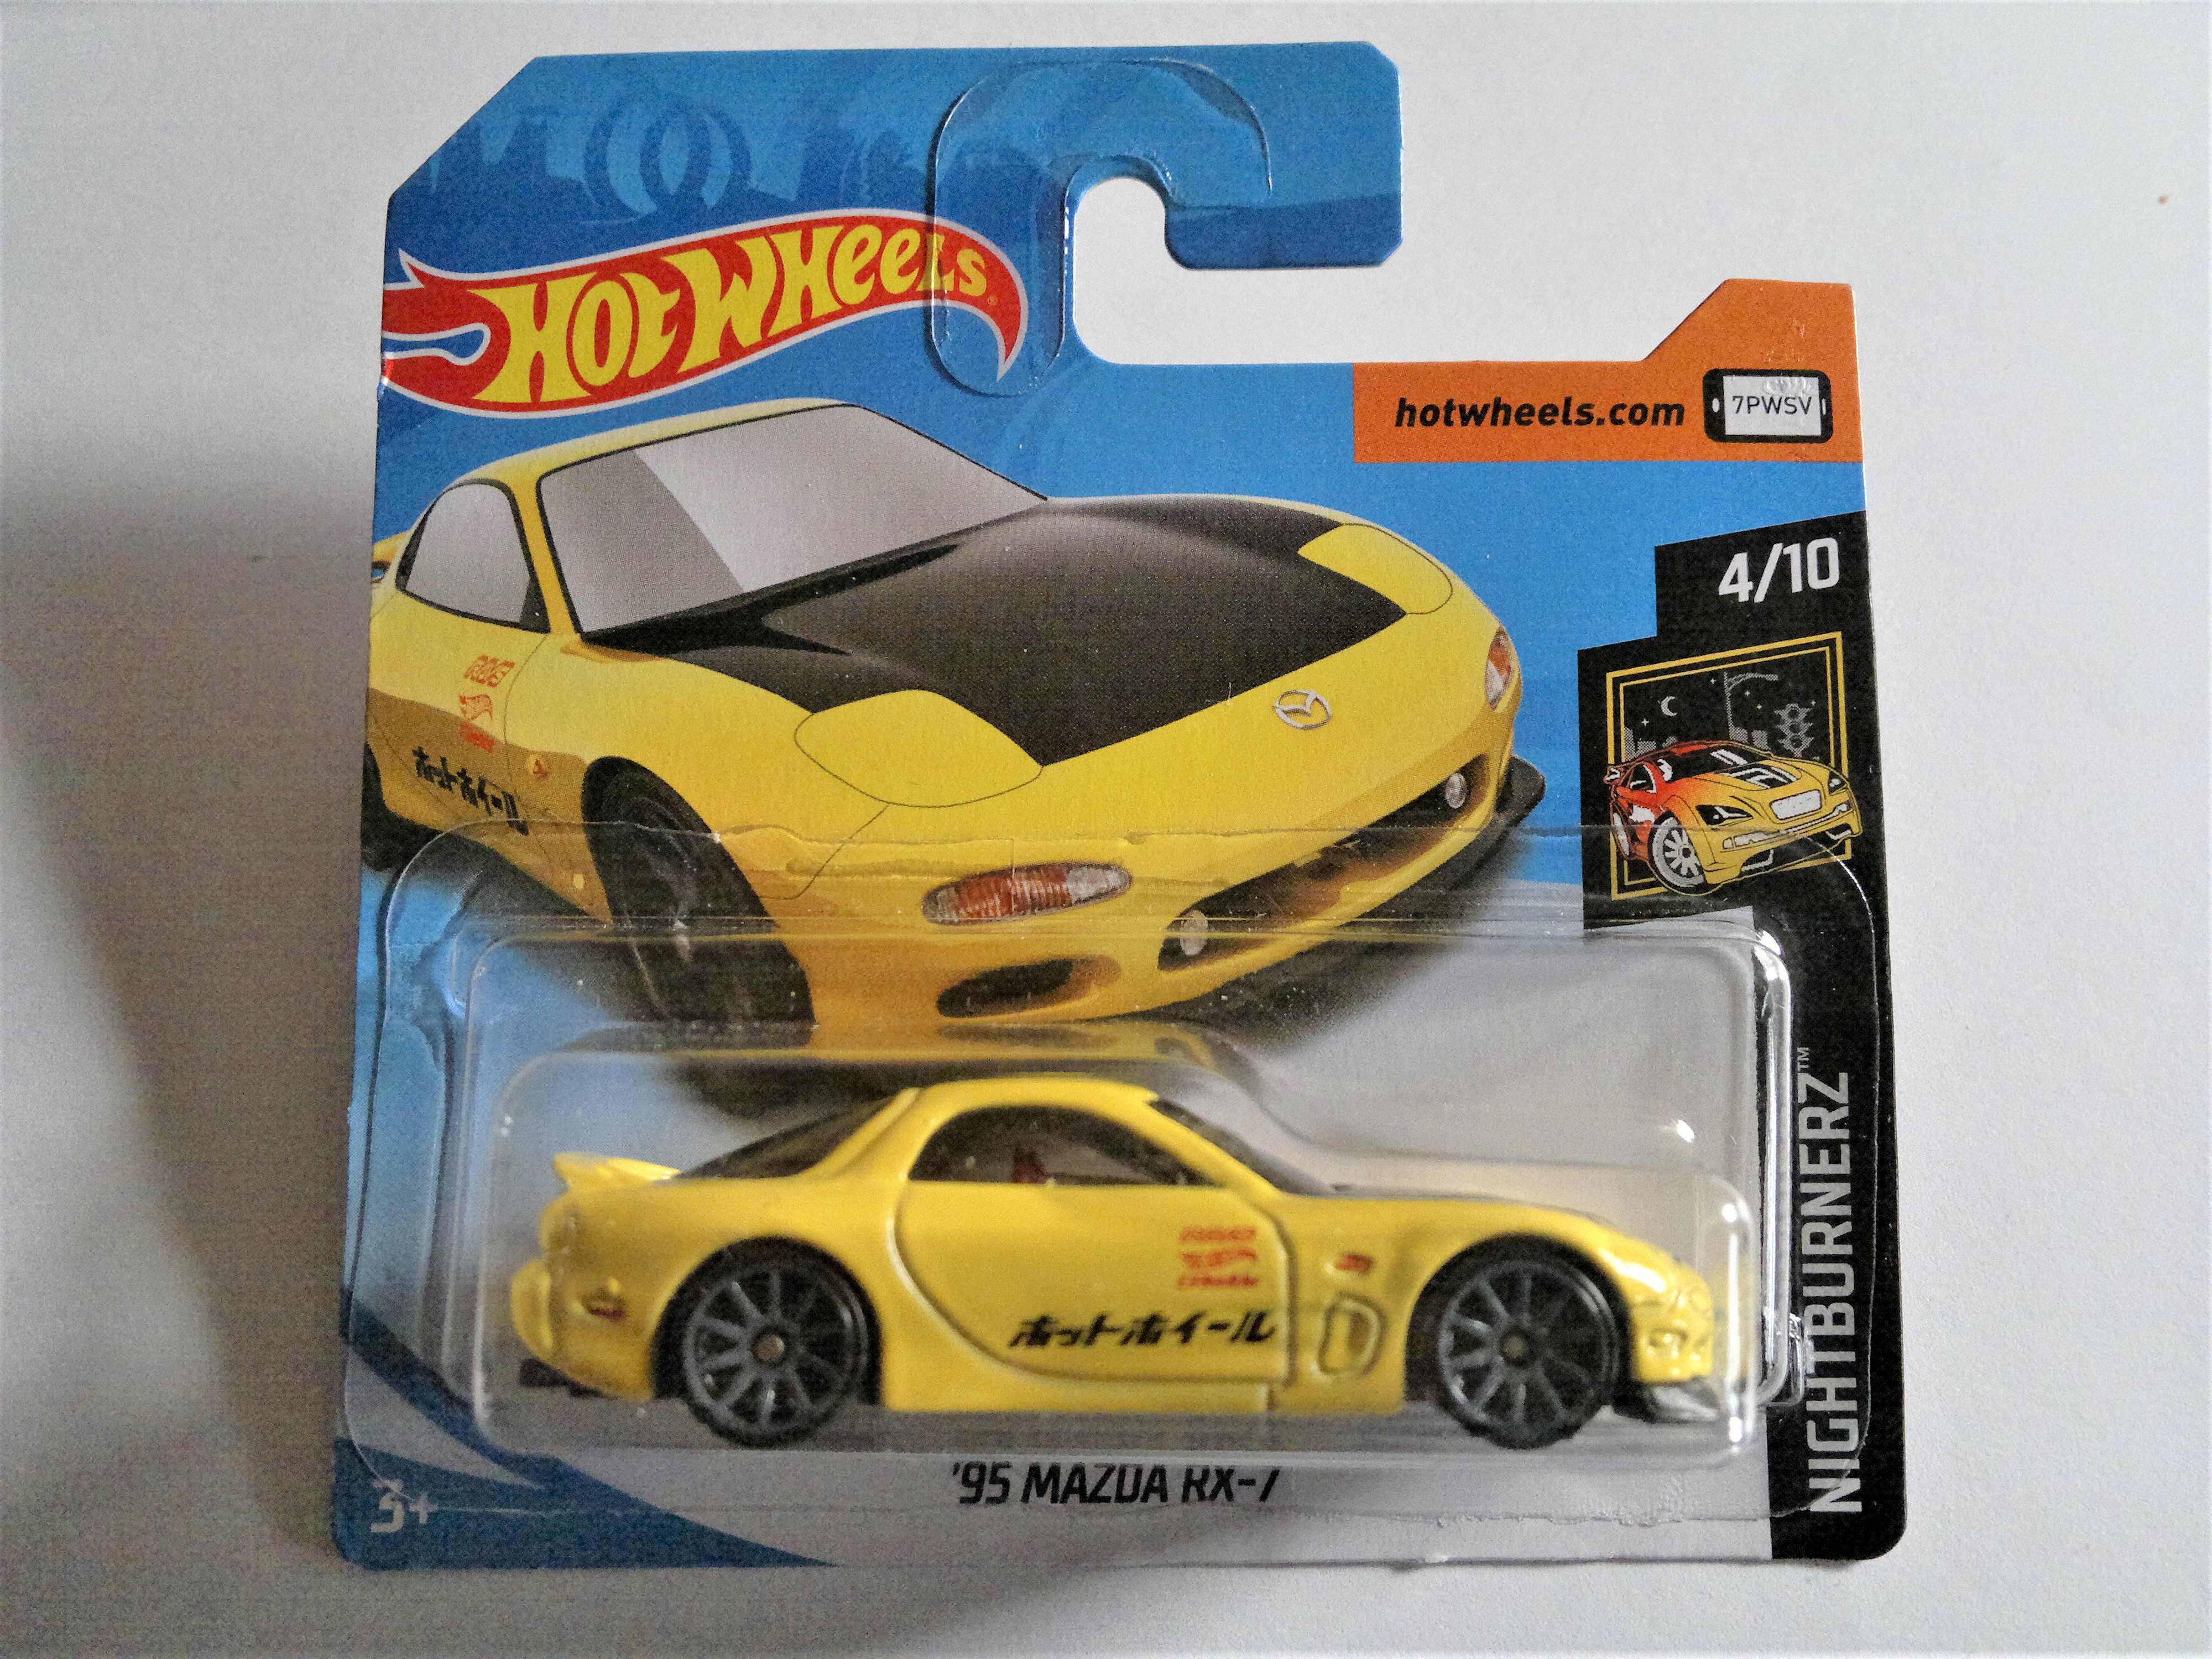 2018 Hot Wheels #16 Nightburnerz '95 Mazda RX-7 yellow